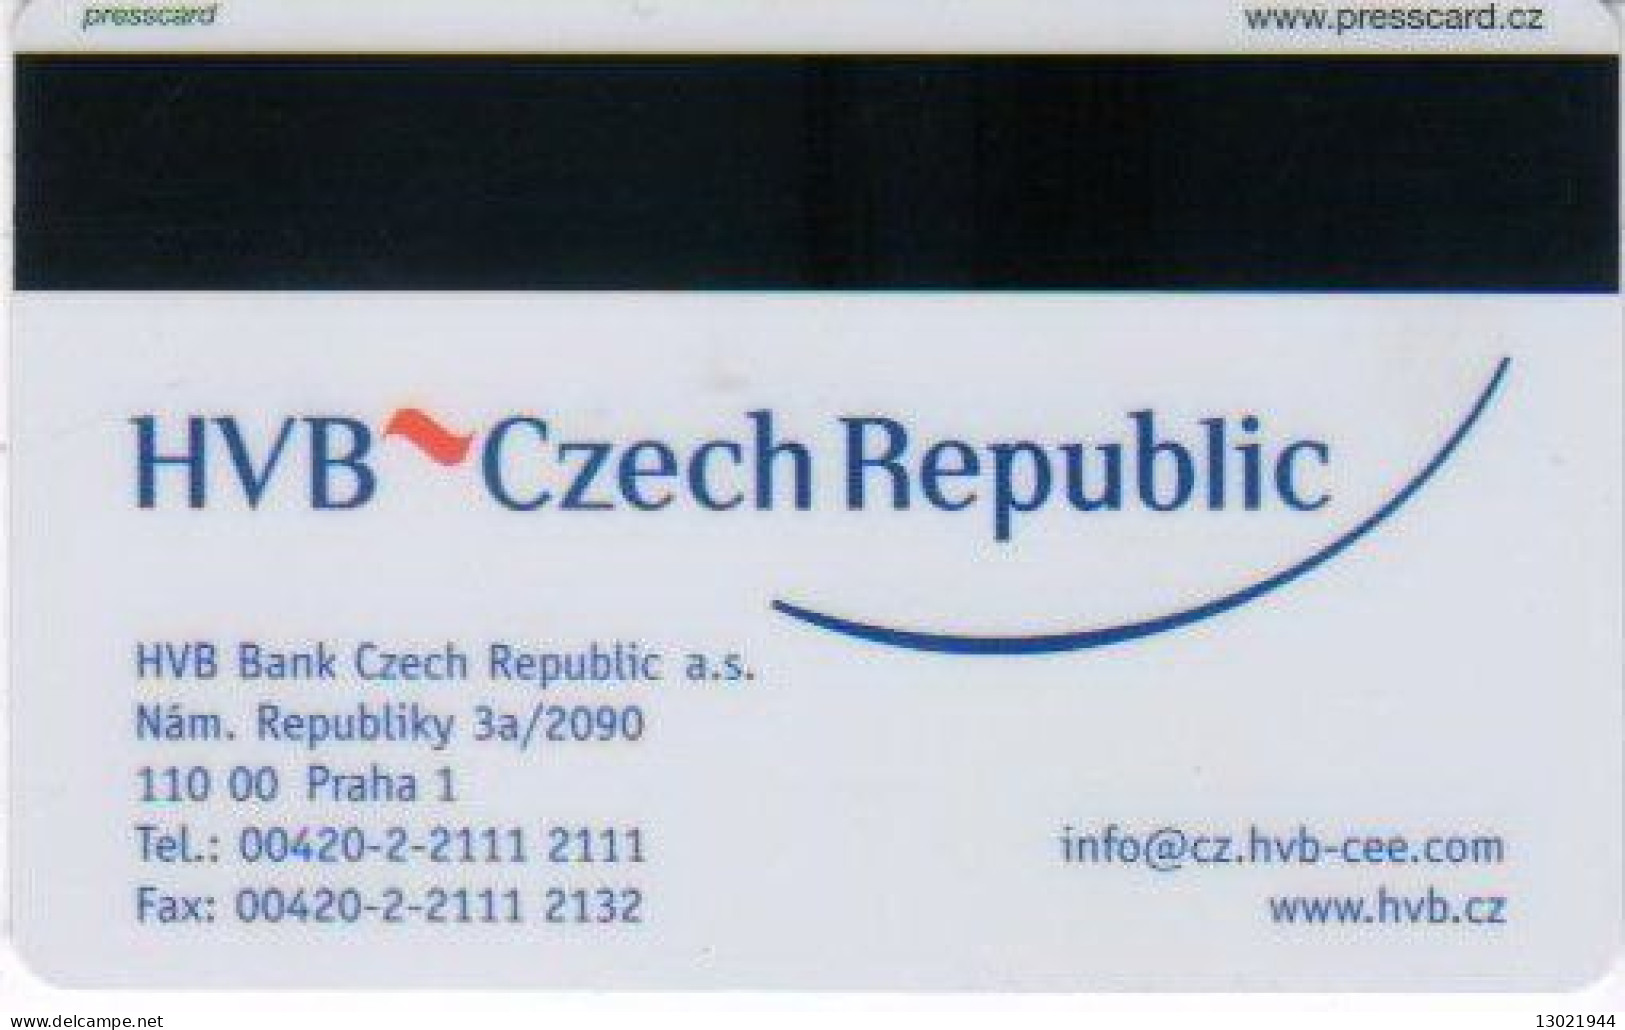 REPUBBLICA CECA  KEY HOTEL Hotel Palace Praha ***** - Hotel Keycards